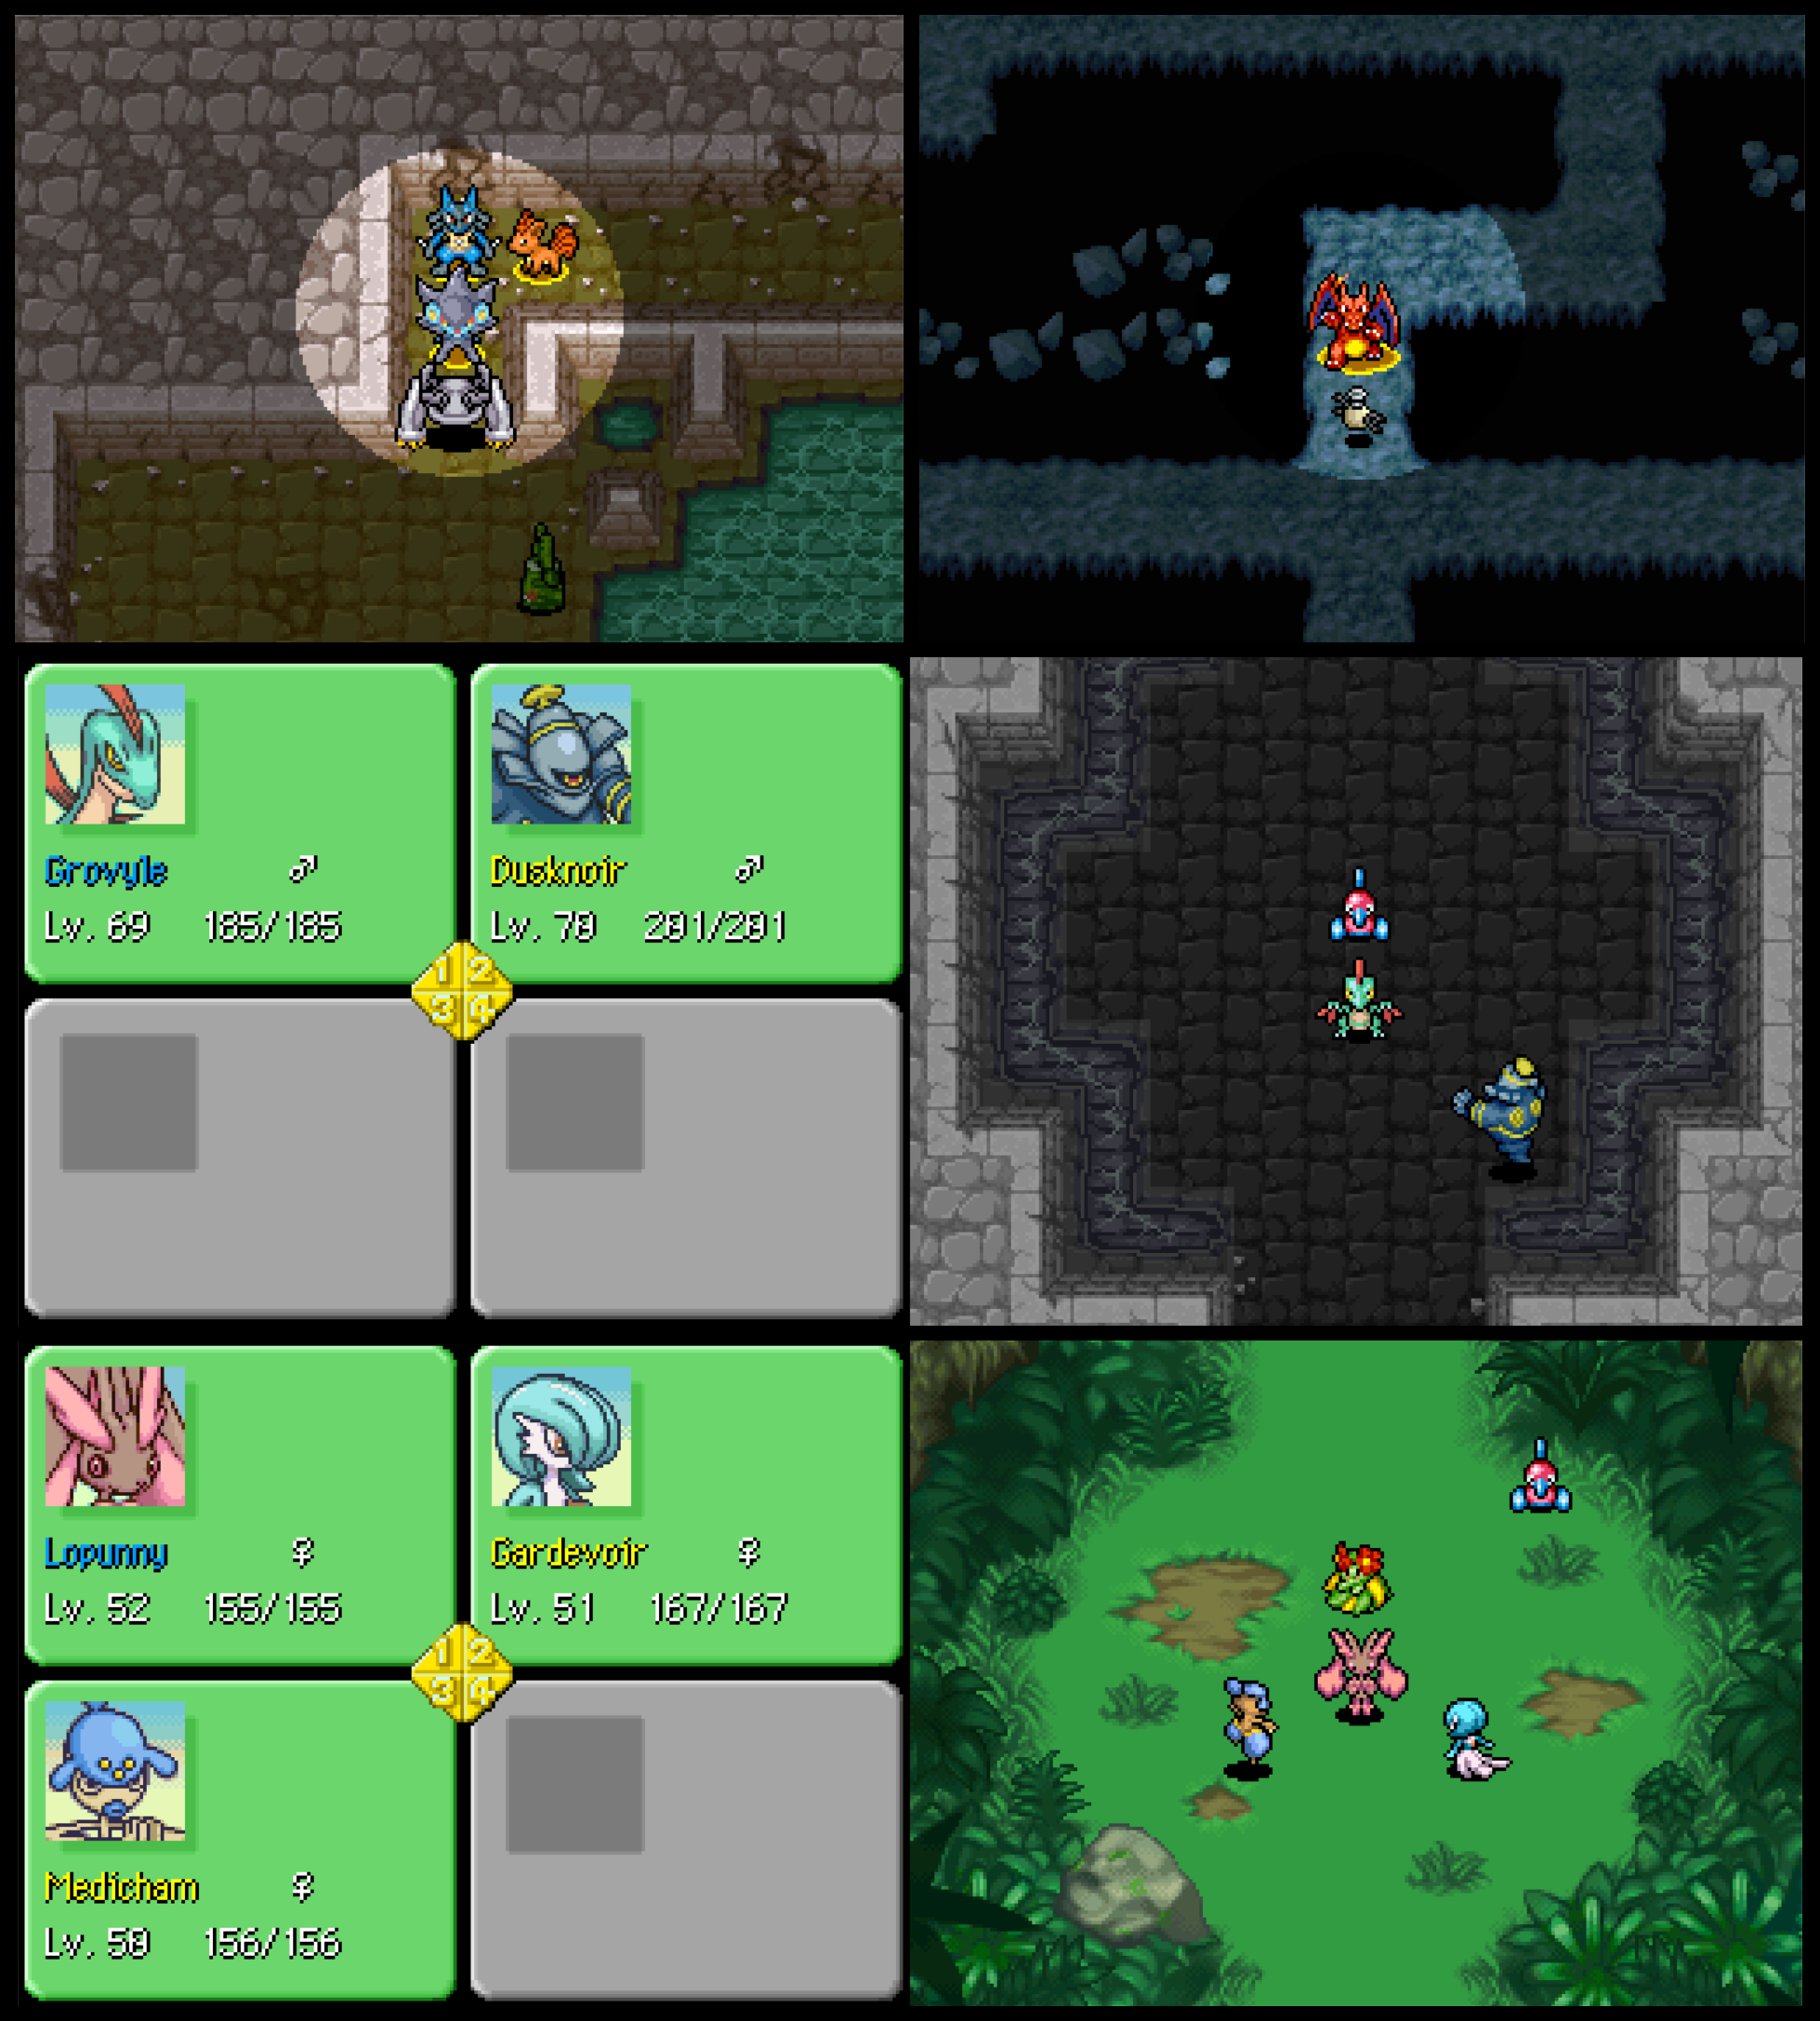 NEW] Pokemon GBA Rom Hack 2022 With Mega Evolution, Randomizer, Good  Graphics, Gen 1-8 & much More!